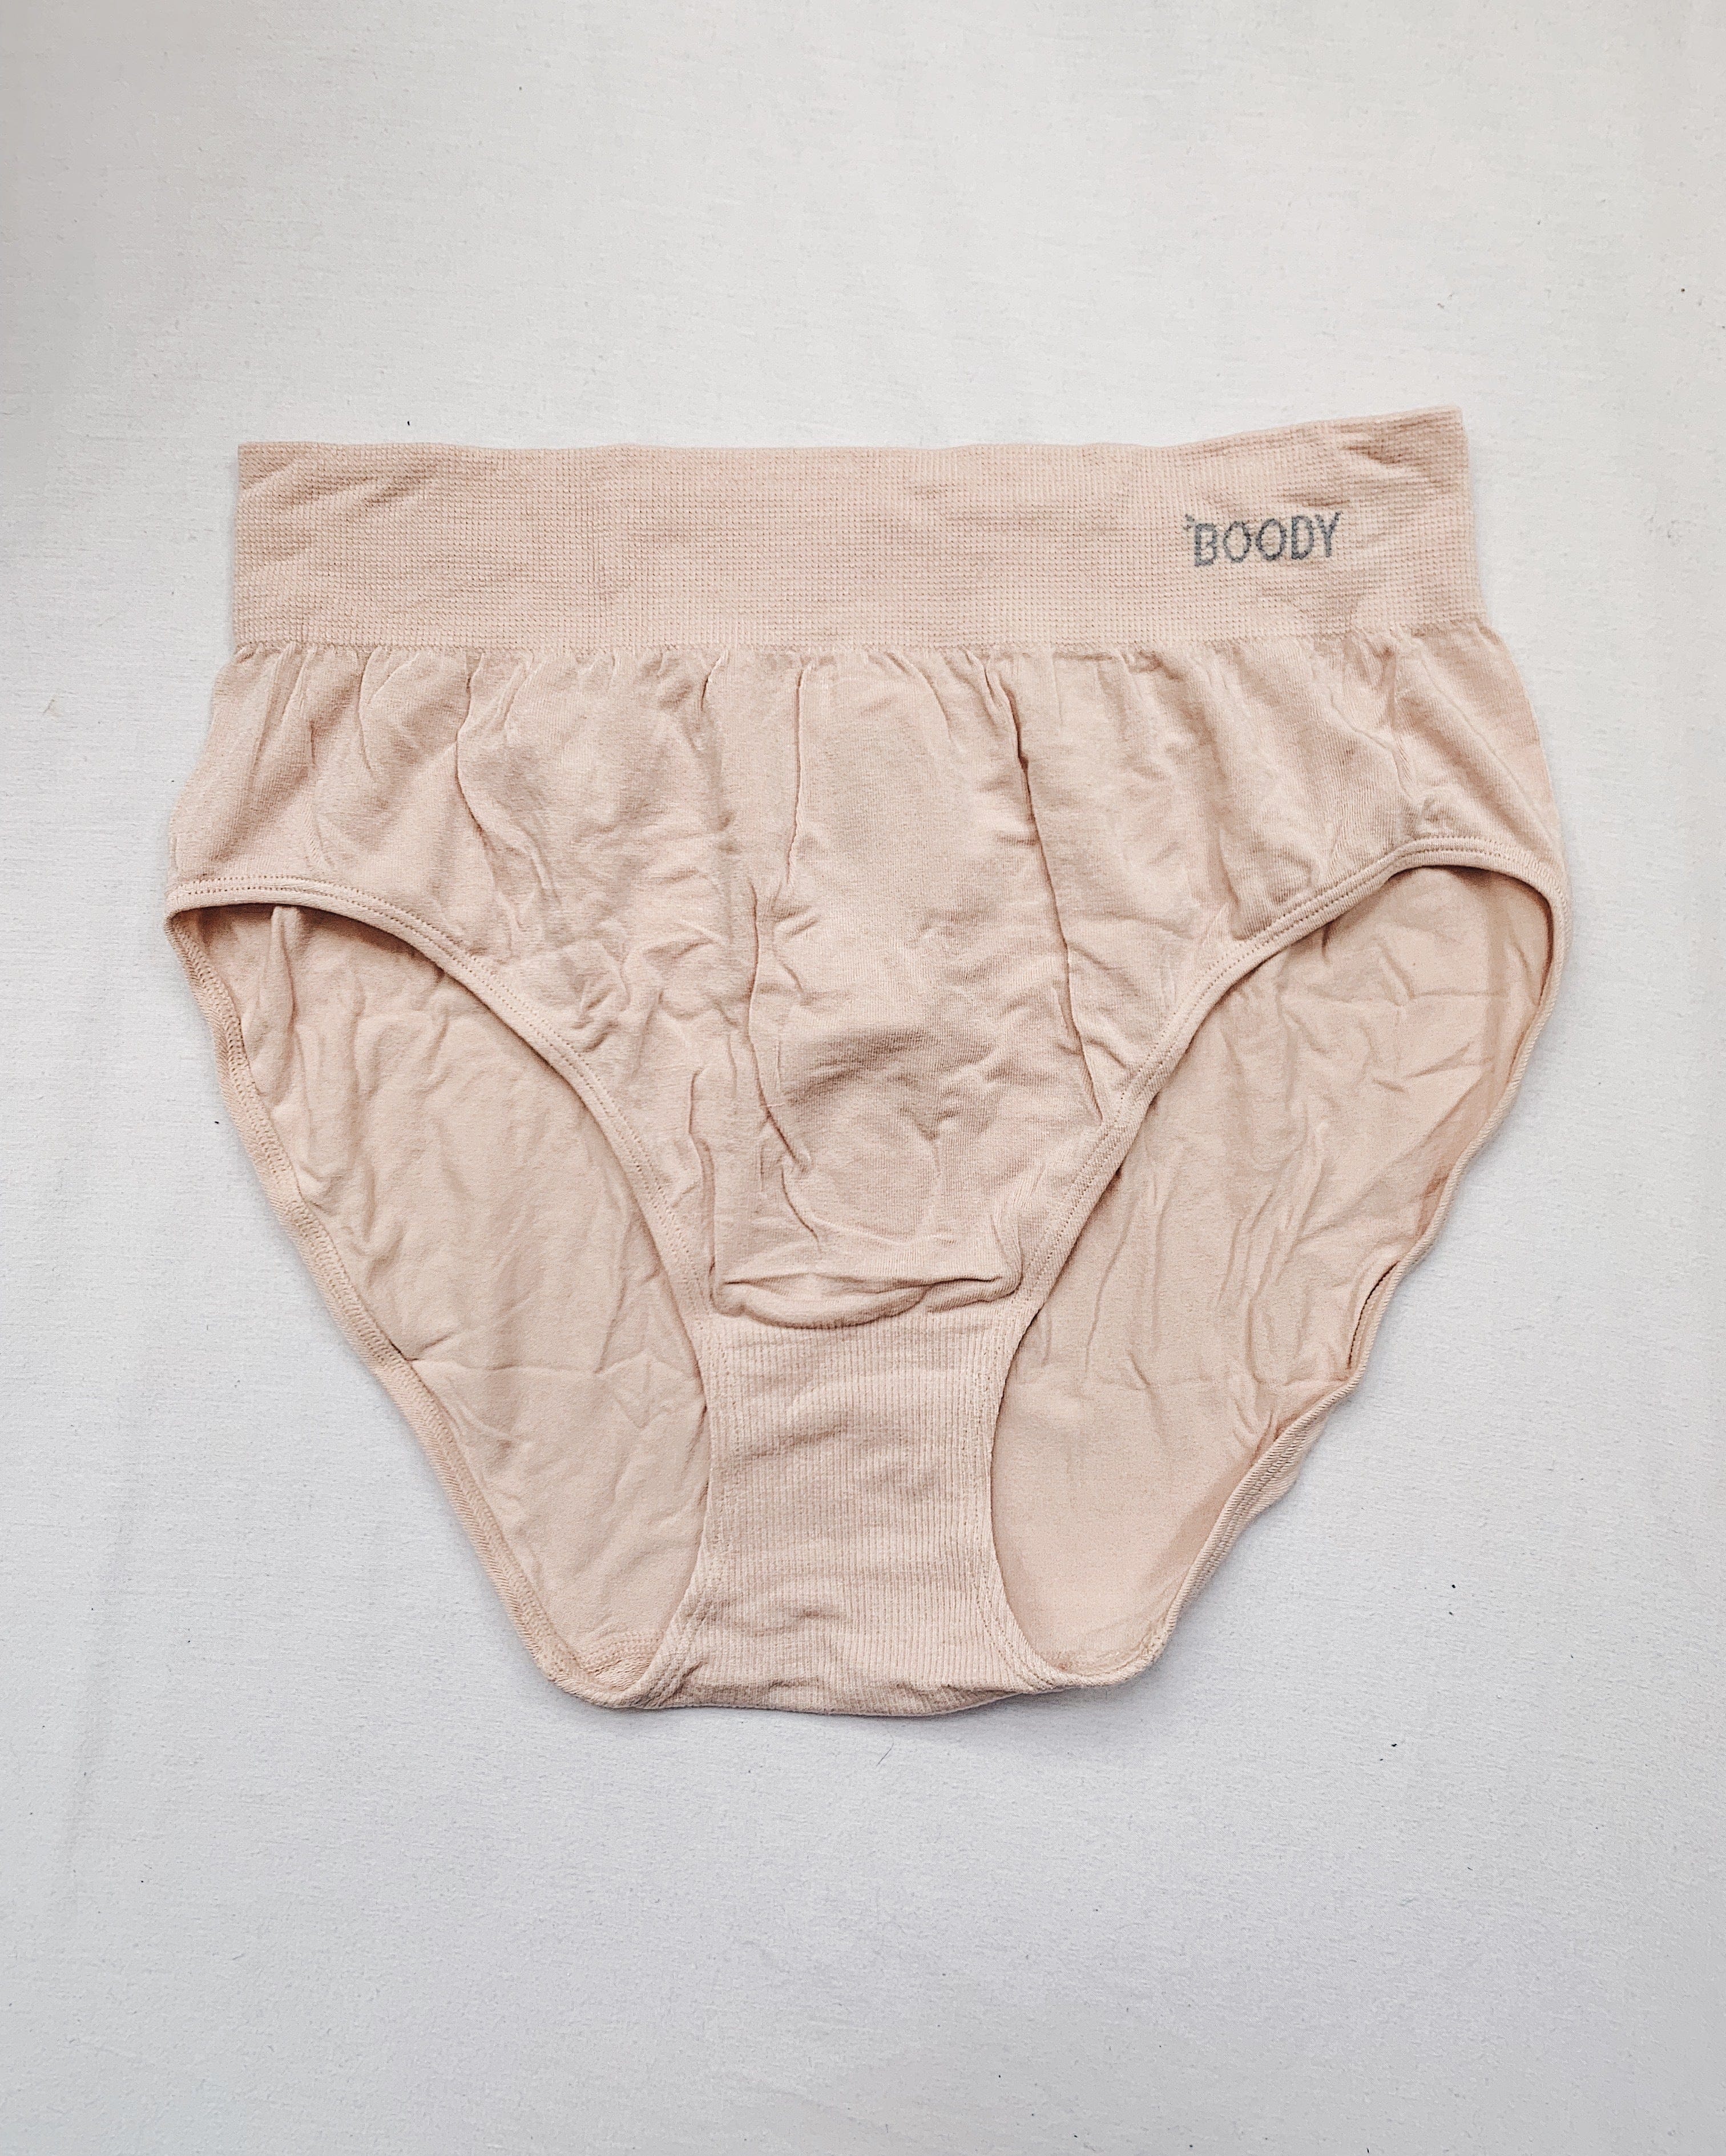 Boody Underwear Full Brief Pants in Nude